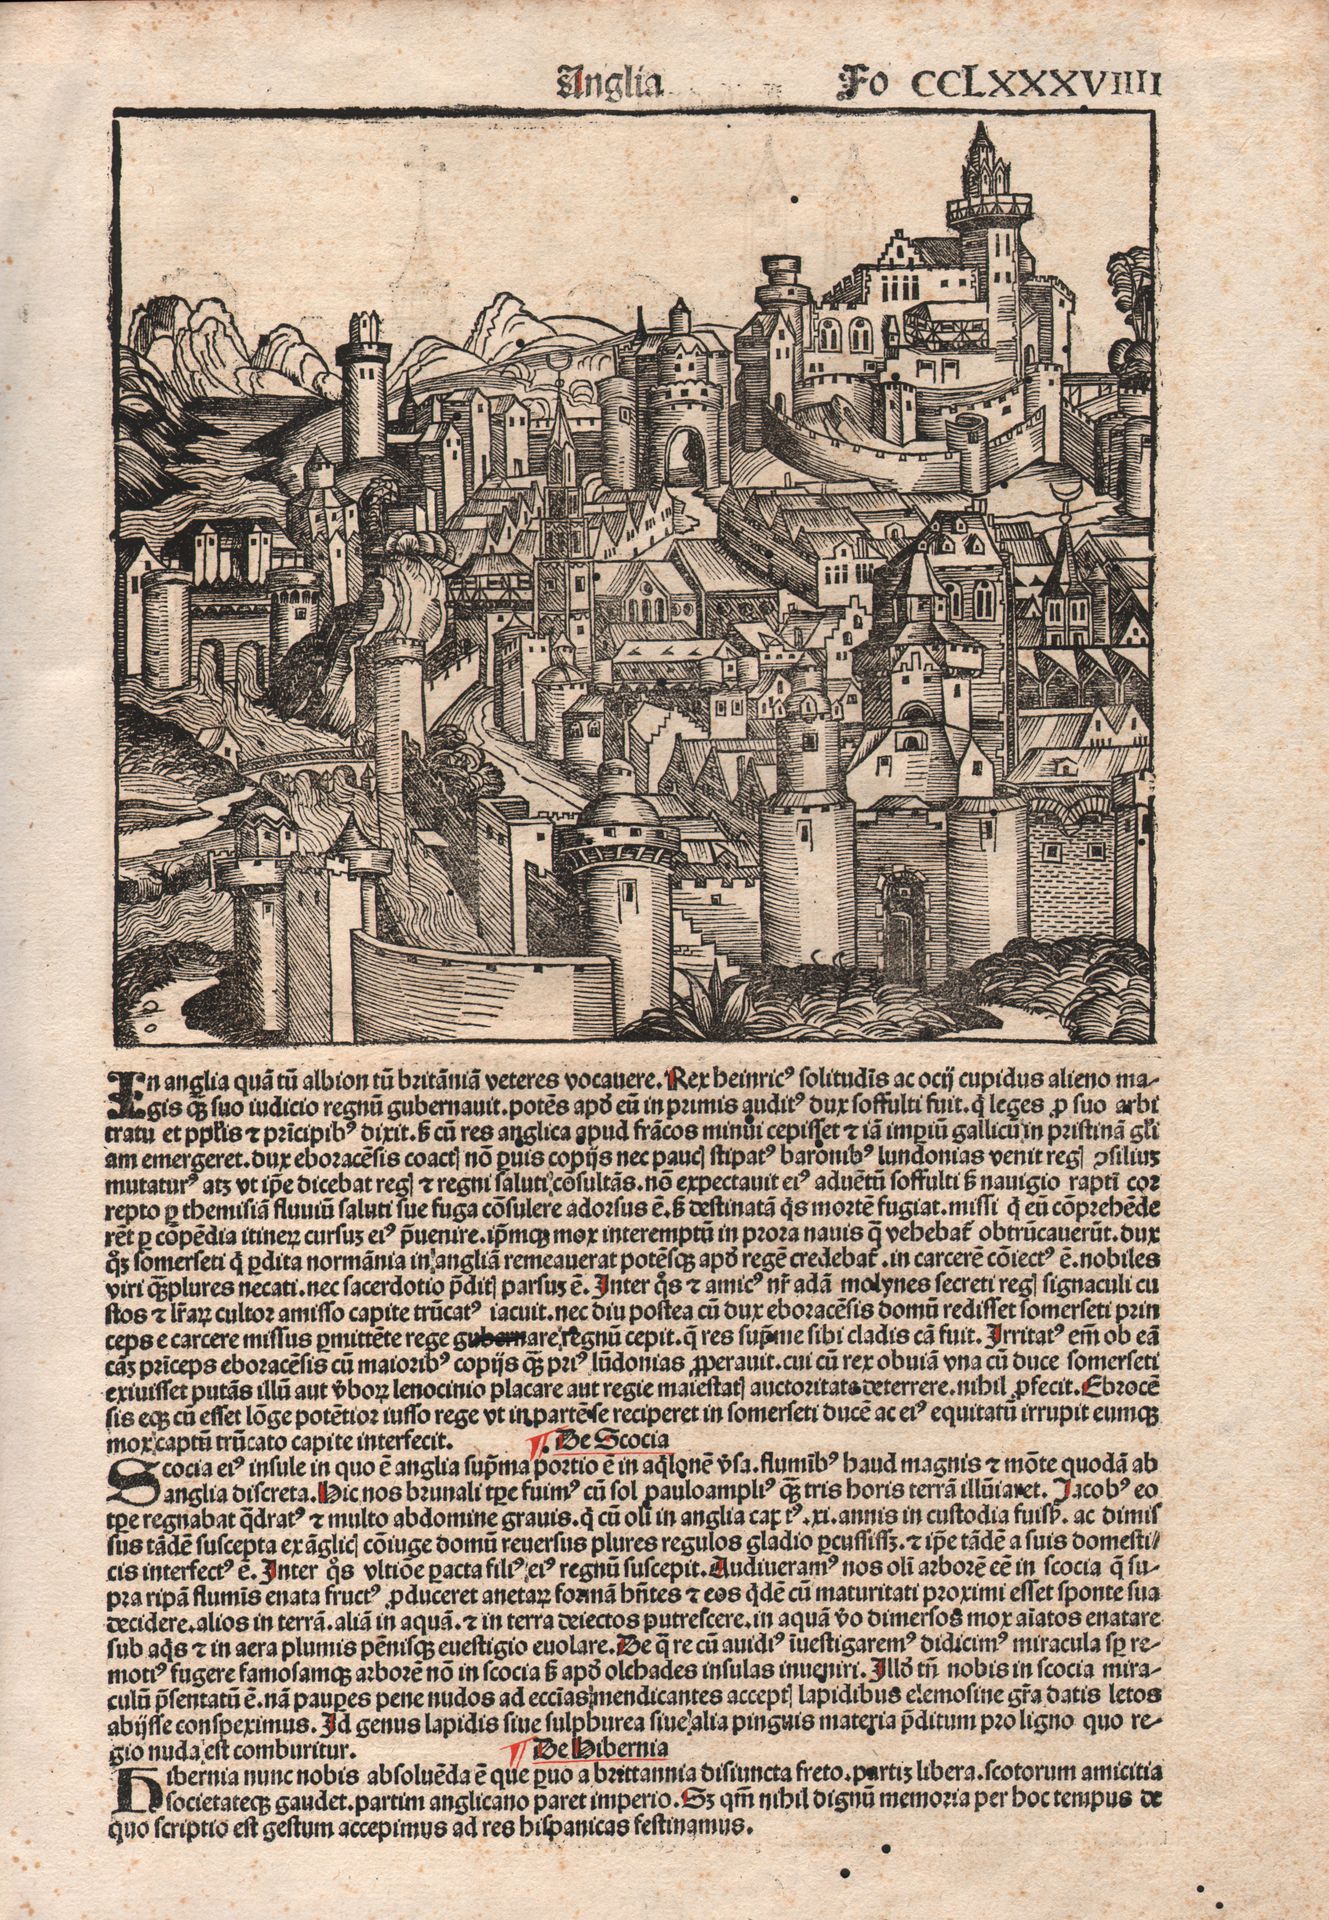 0 Nuremberg Chronicle 1493 - Views of Spain and England / Description: Anglia Fo&hellip;